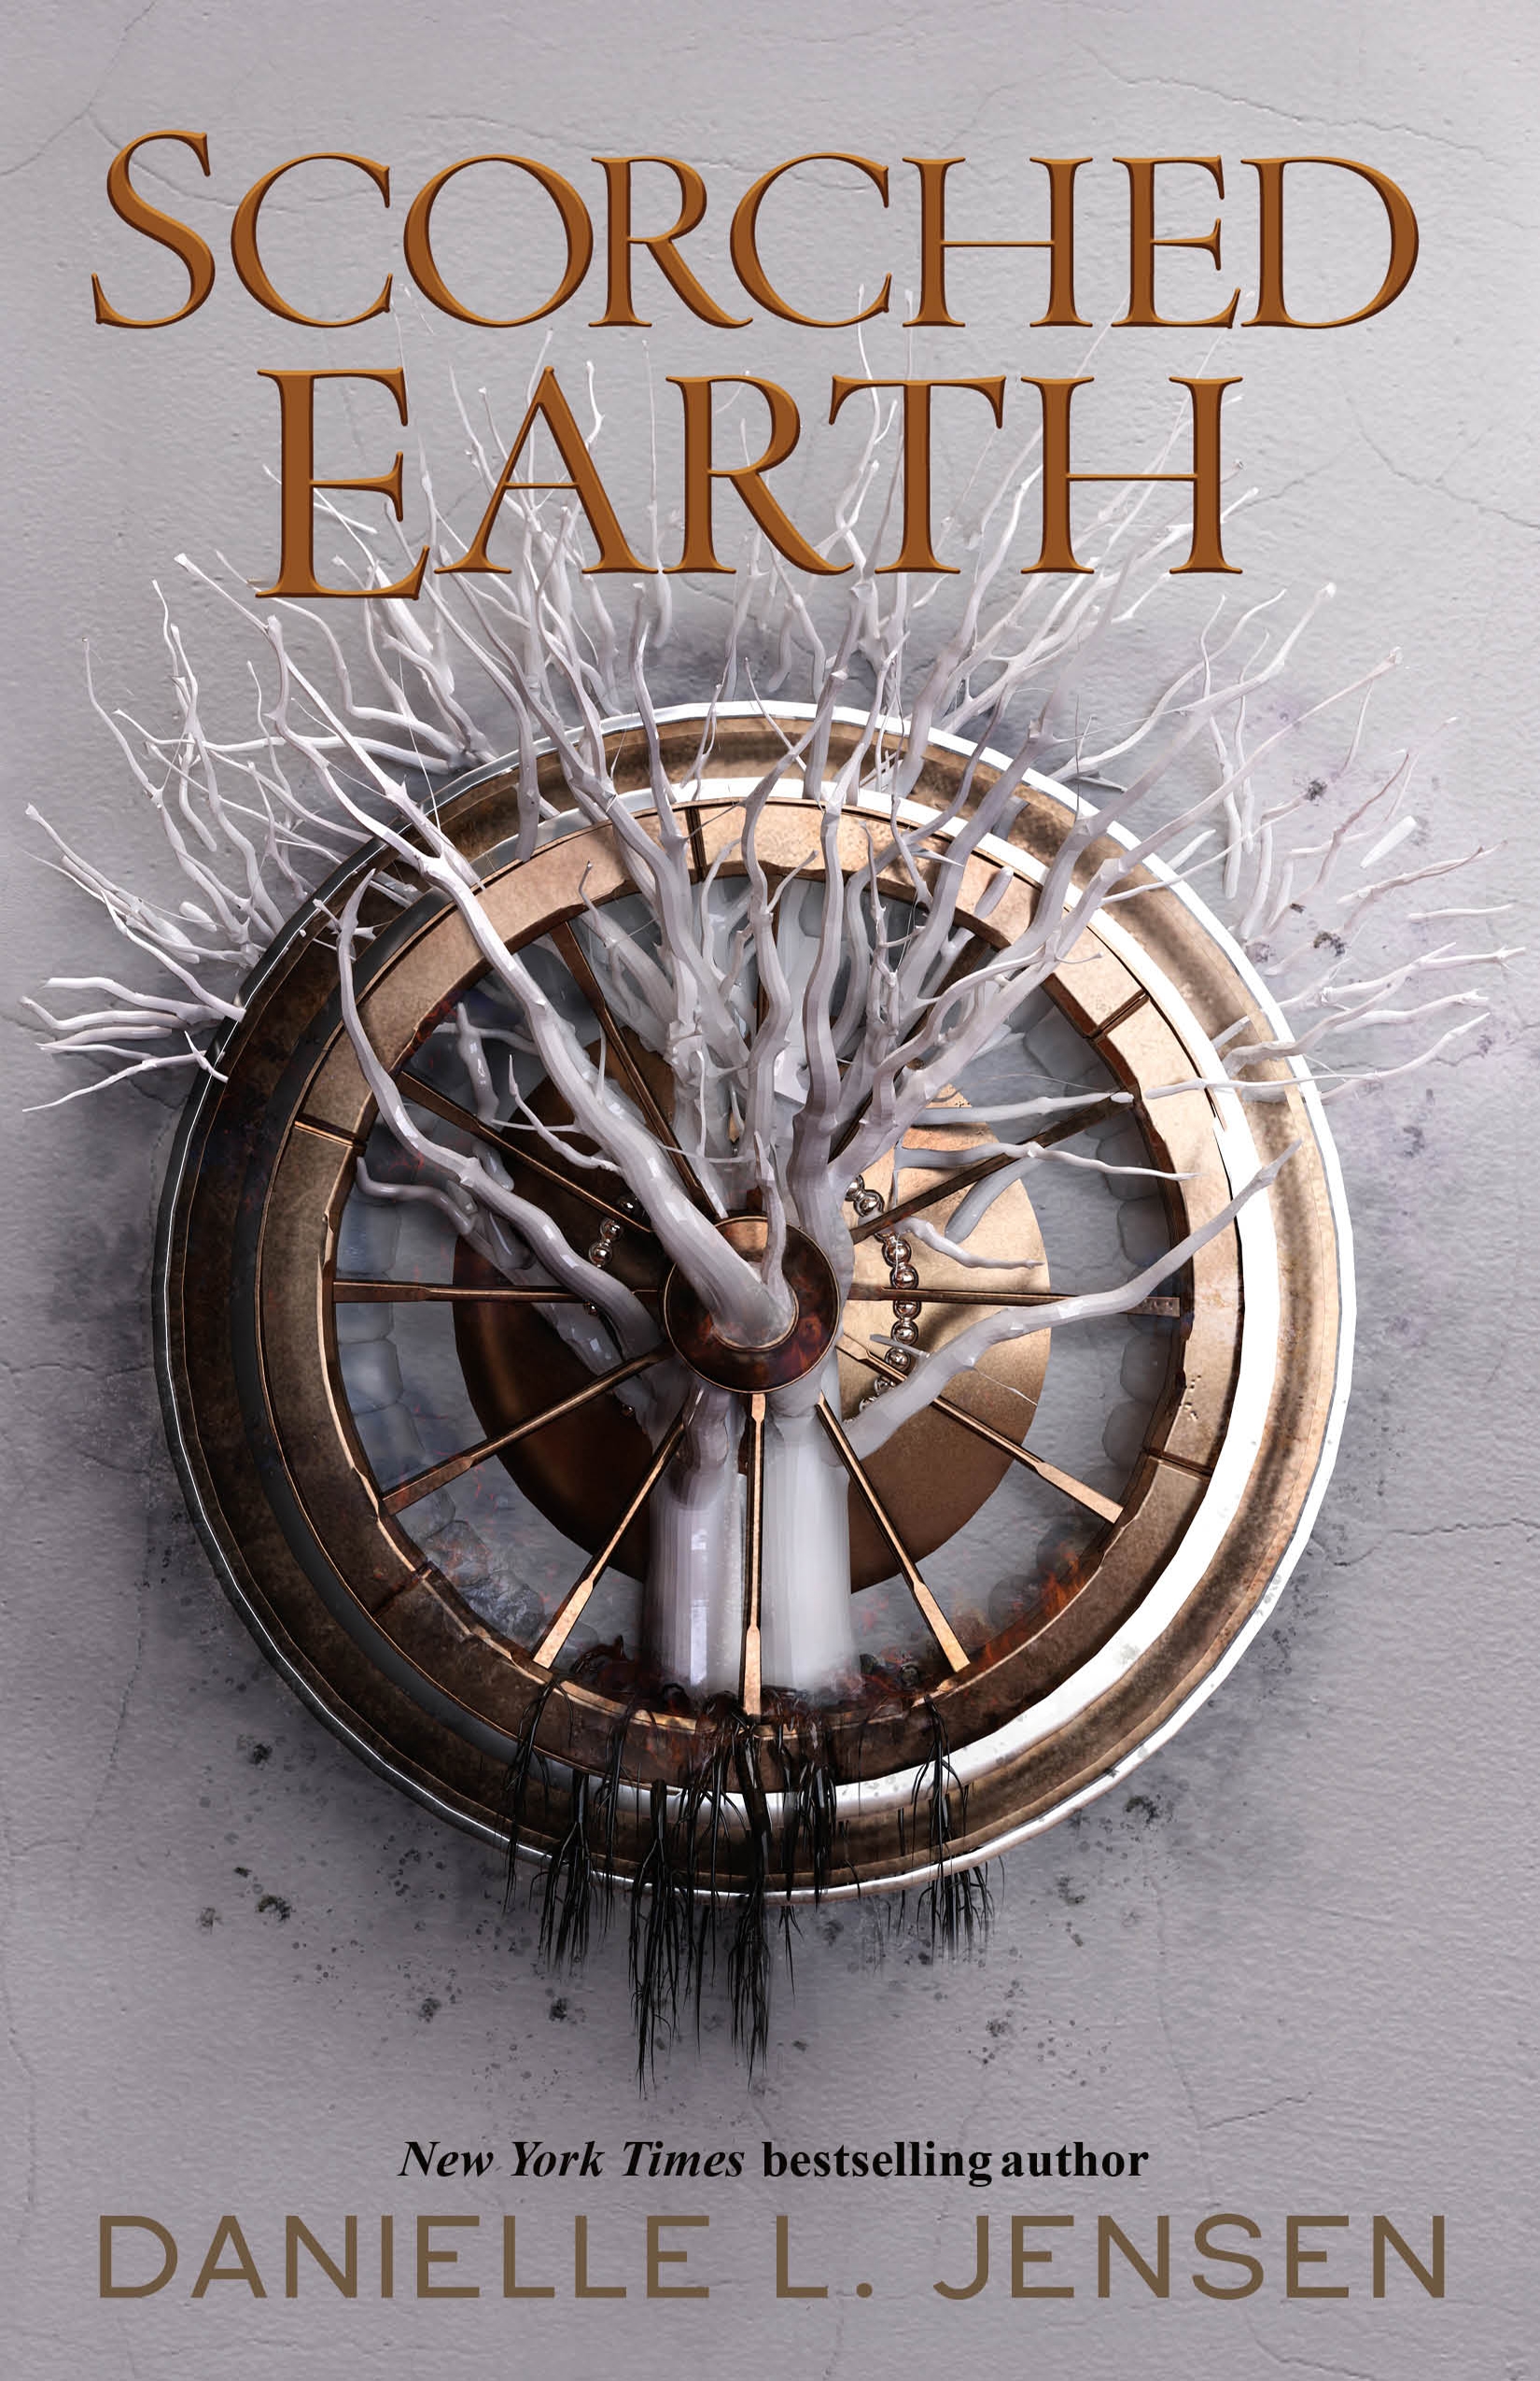 Scorched Earth by Danielle L. Jensen